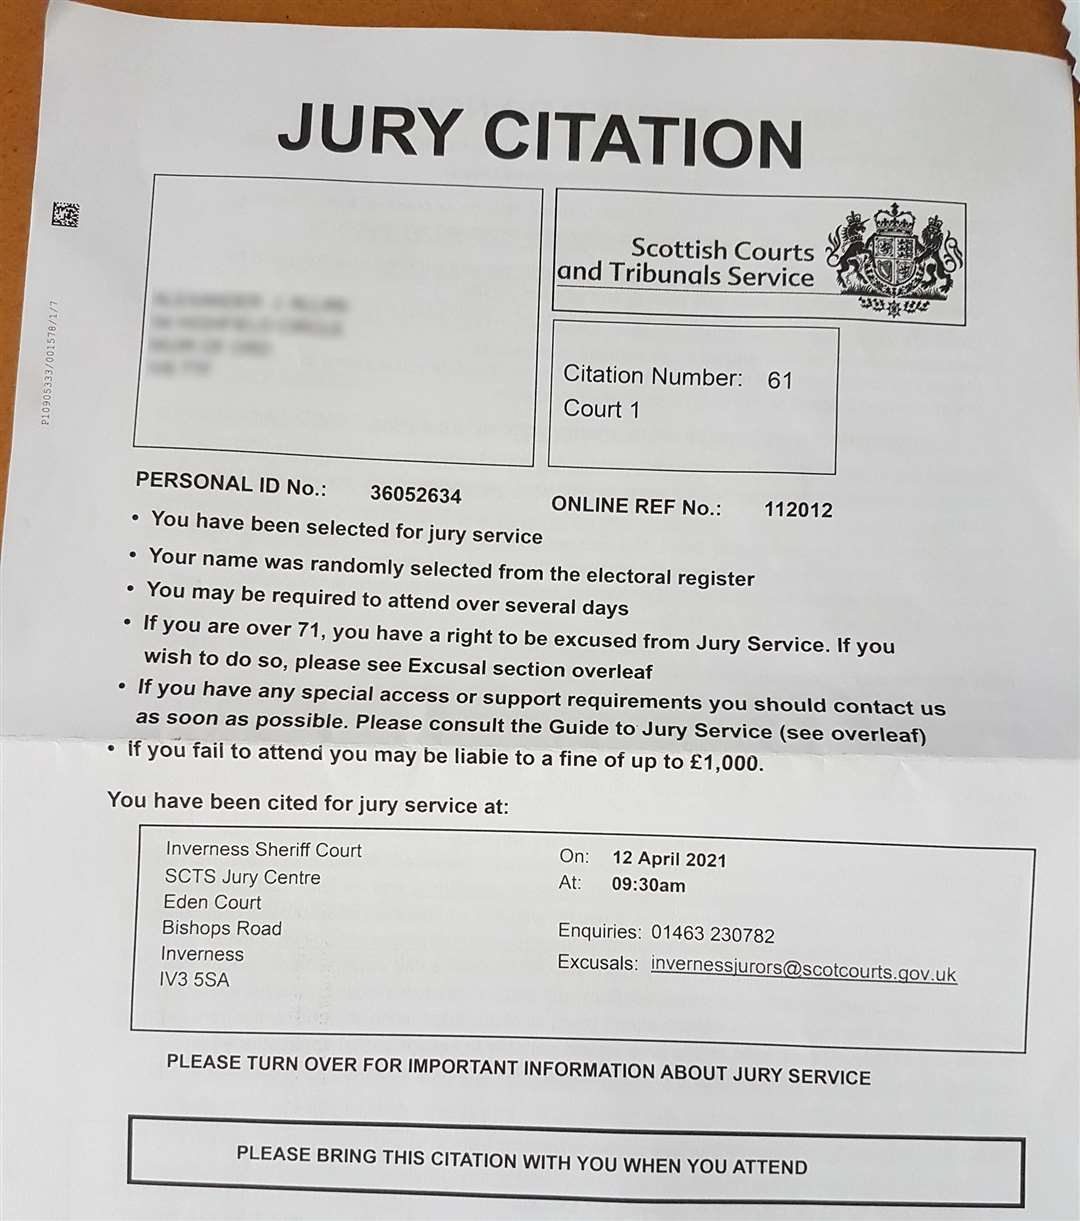 The jury citation letter.